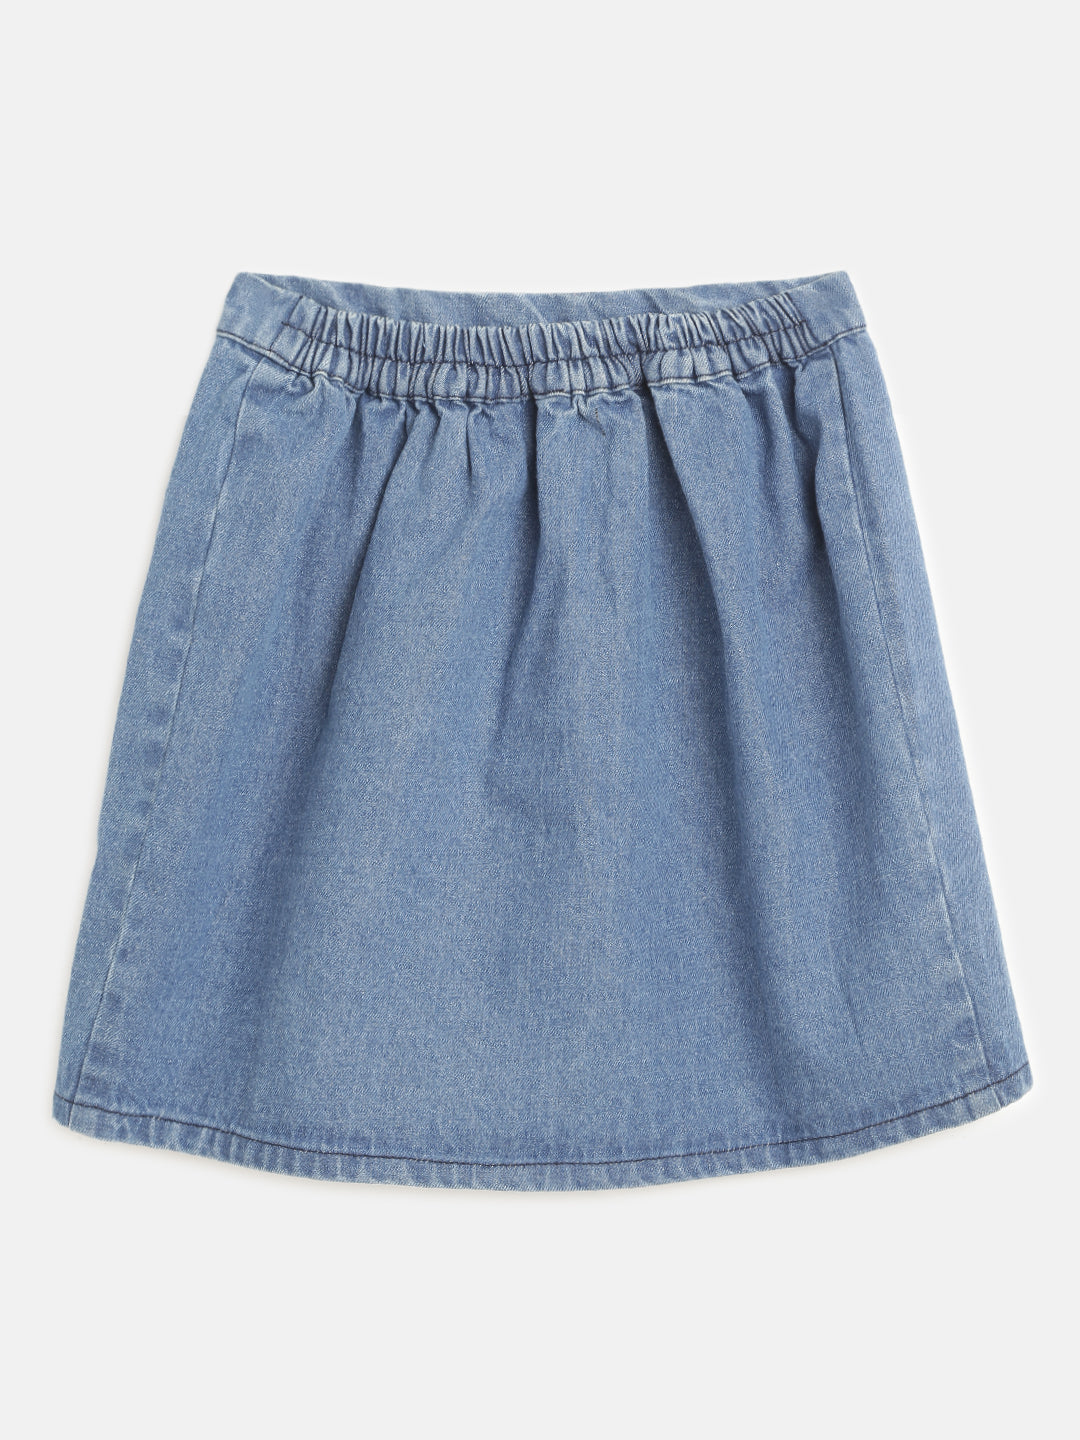 Girls Blue Denim Button Mini Skirt